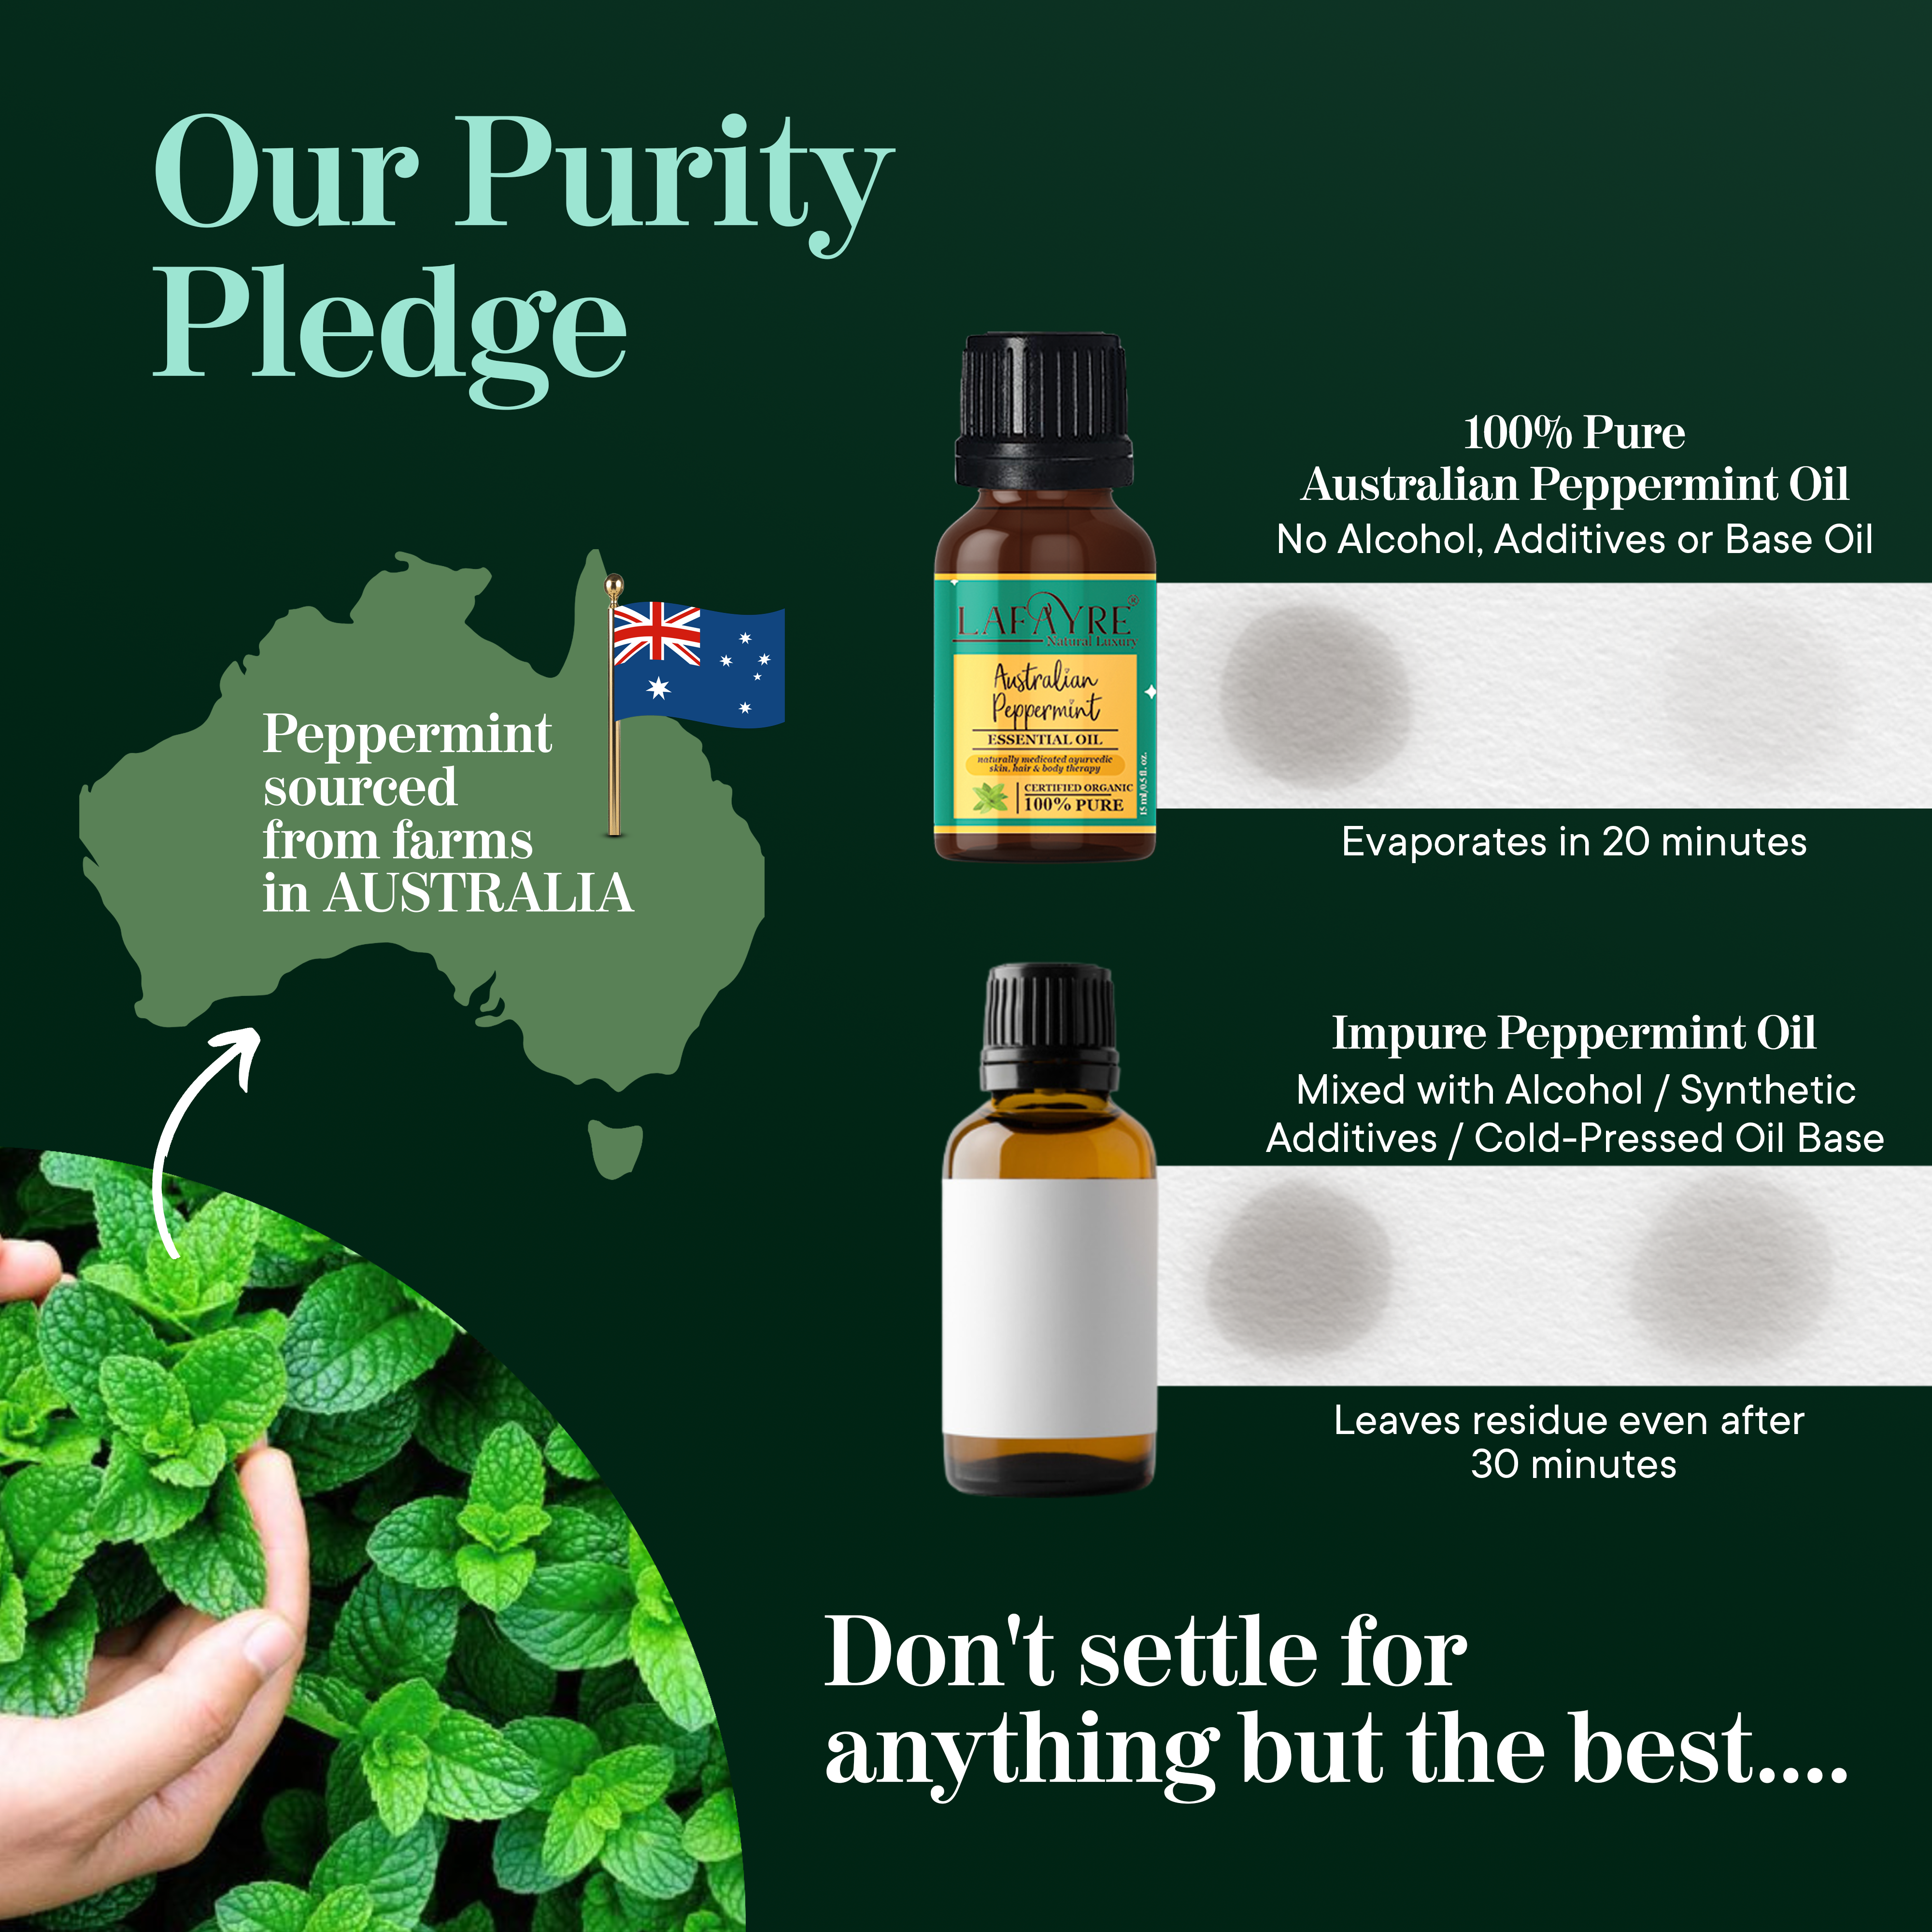 Australian Peppermint Oil pledge